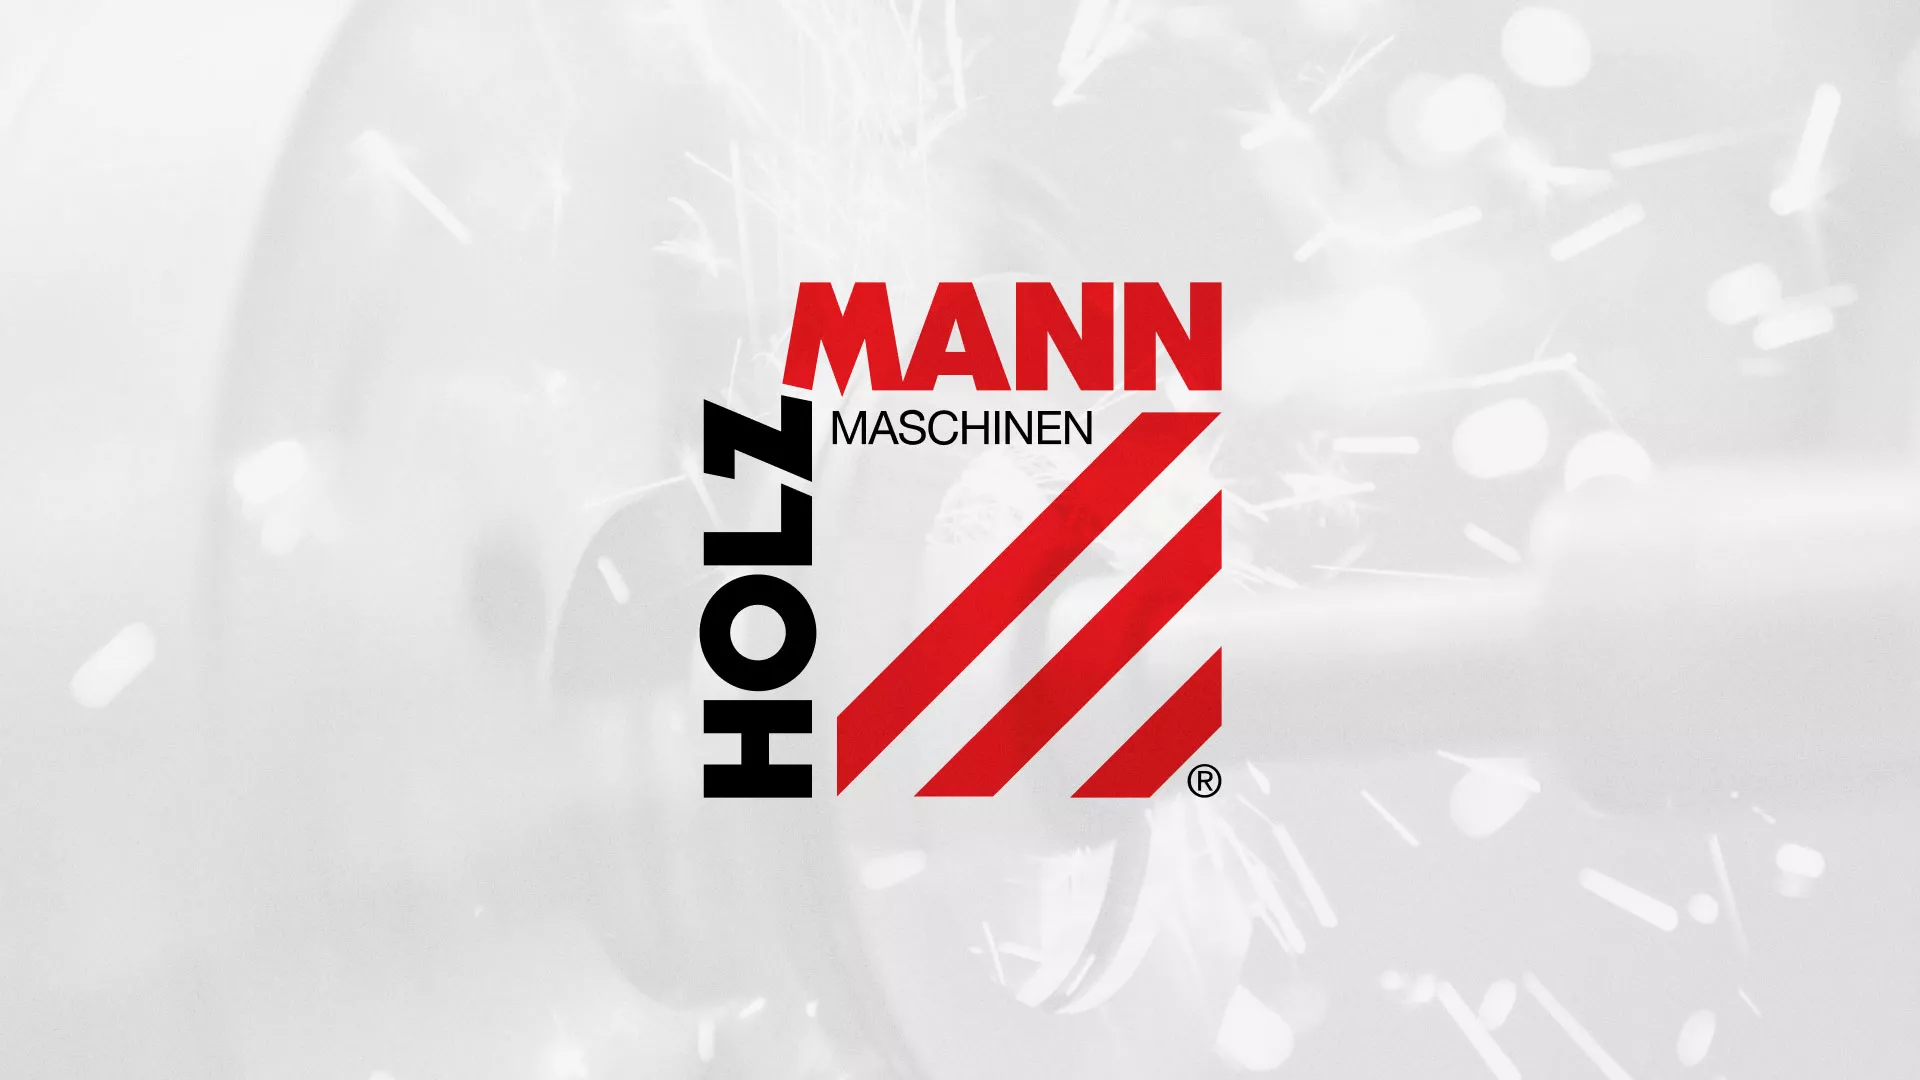 Создание сайта компании «HOLZMANN Maschinen GmbH» в Фрязино